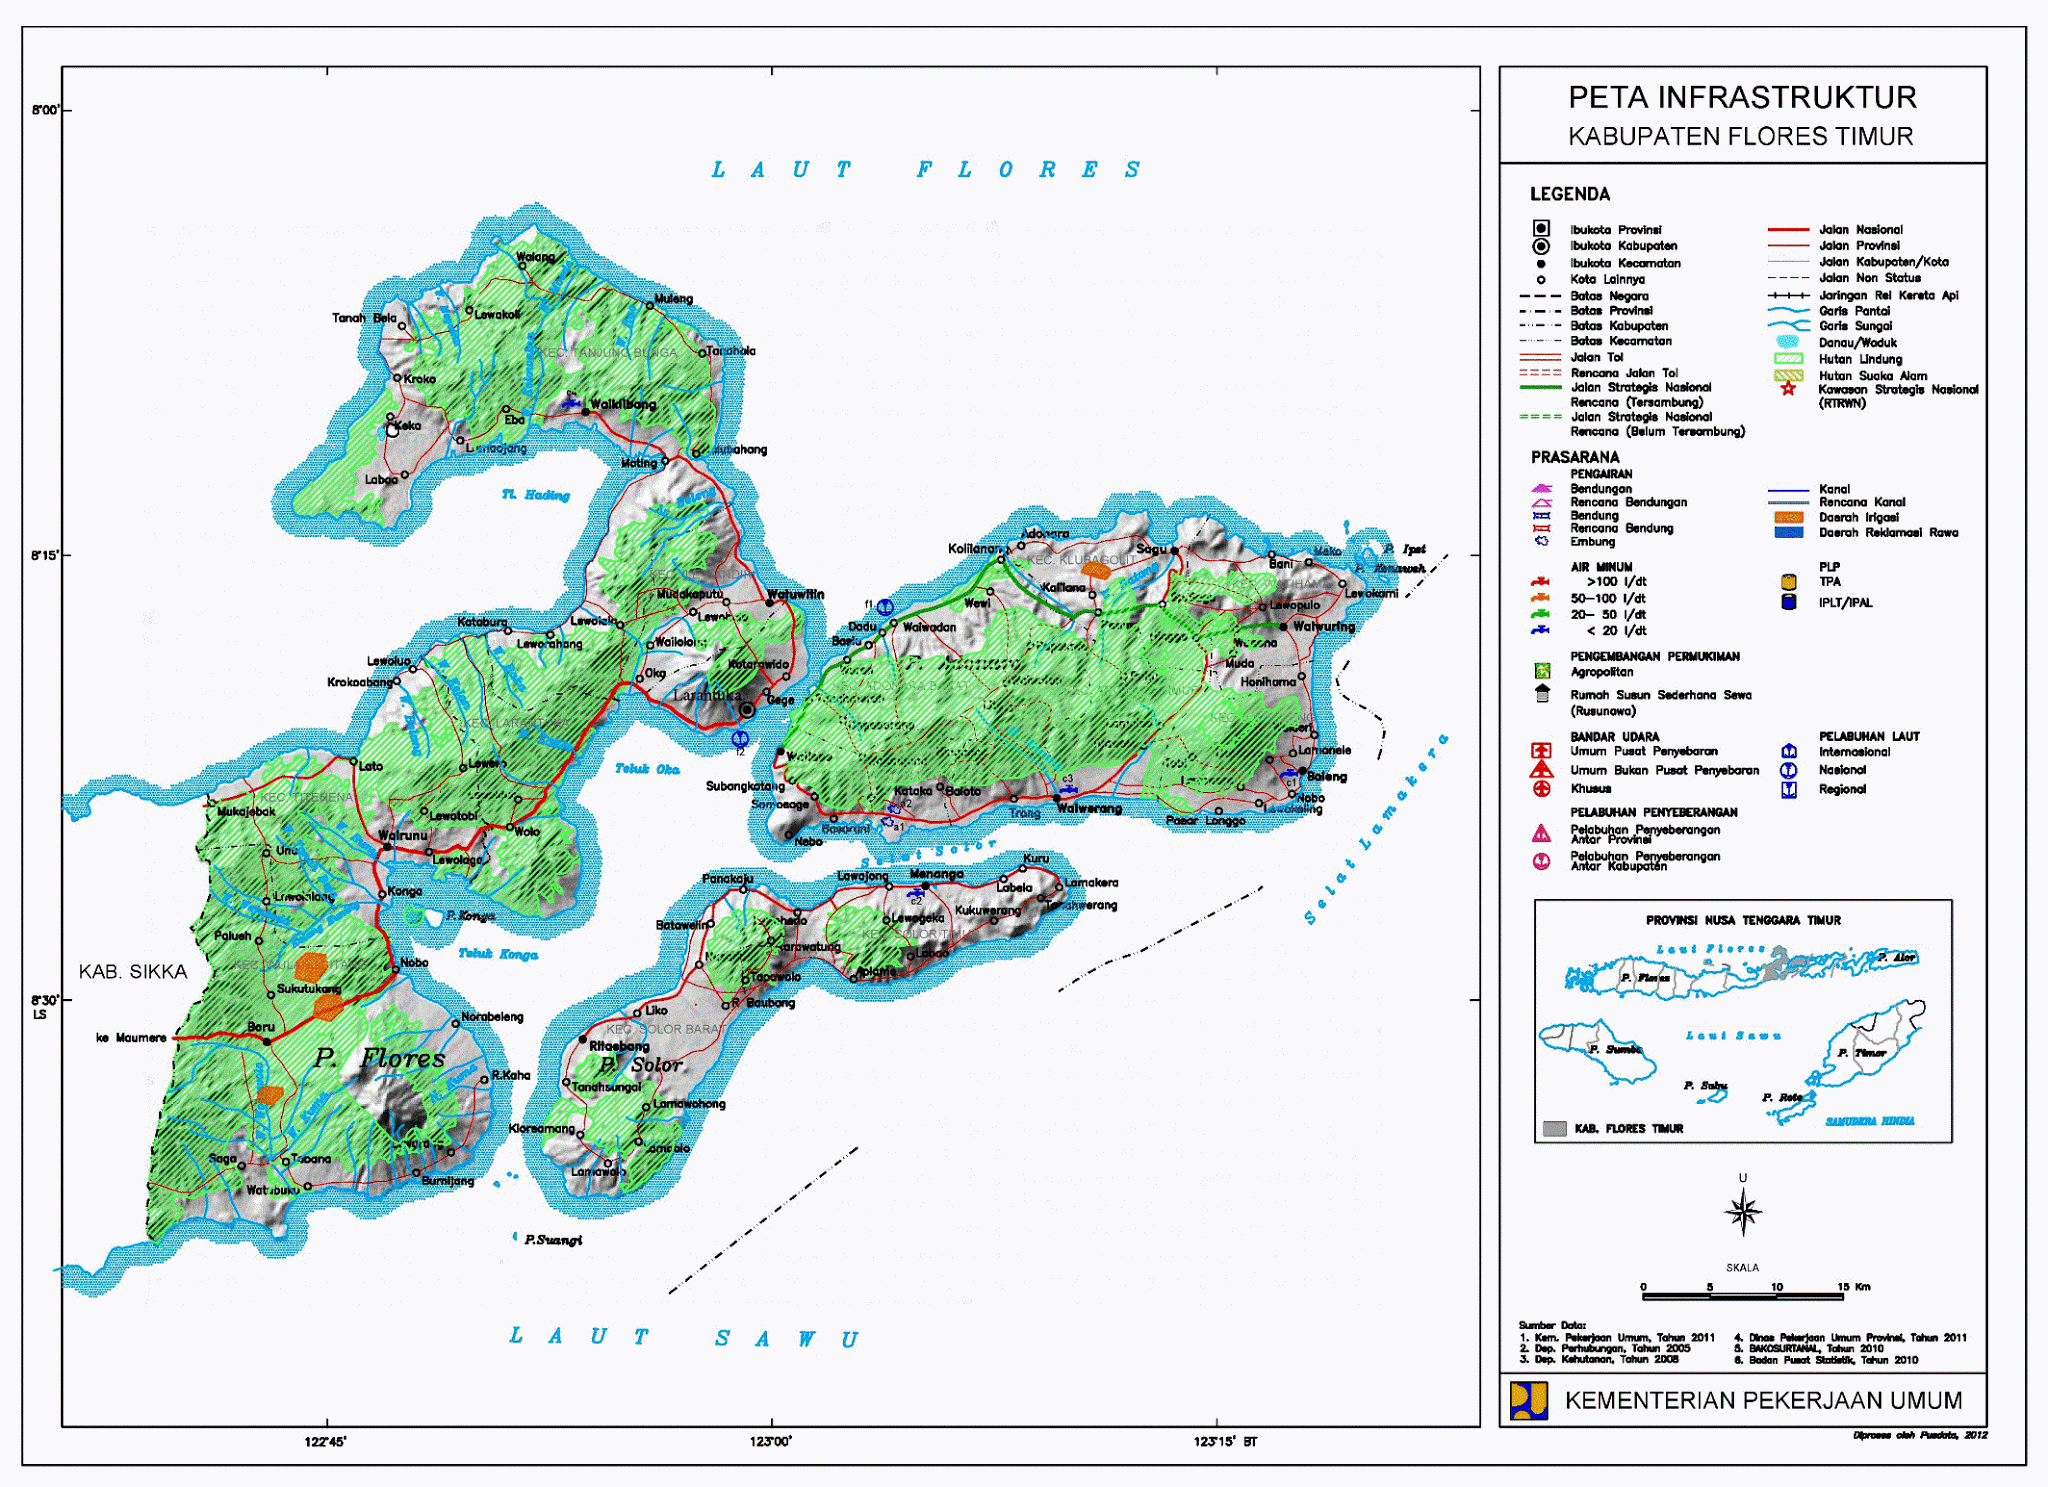  Peta  Kota Peta  Kabupaten Flores Timur